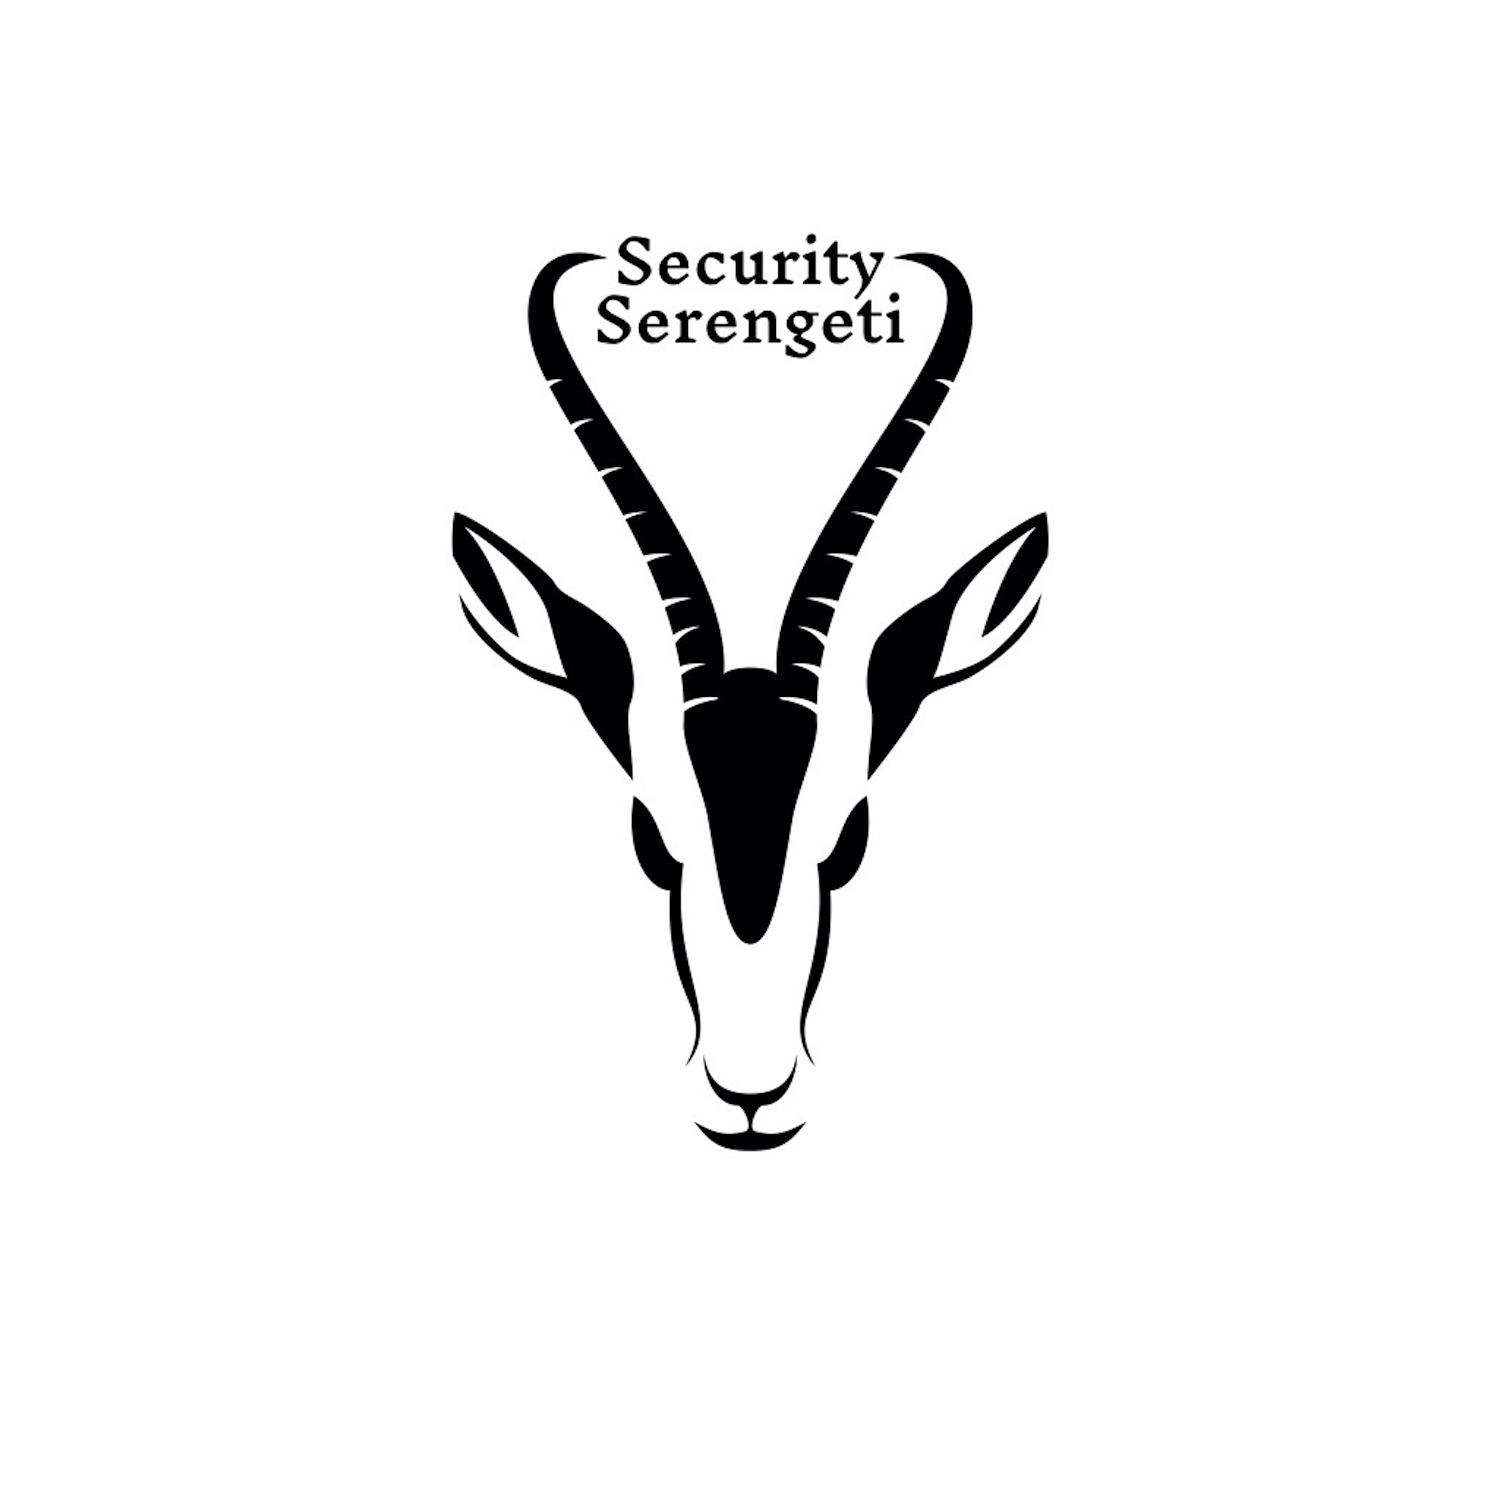 SS-RPRT-097: Blackberry Quarterly Threat Intel Report